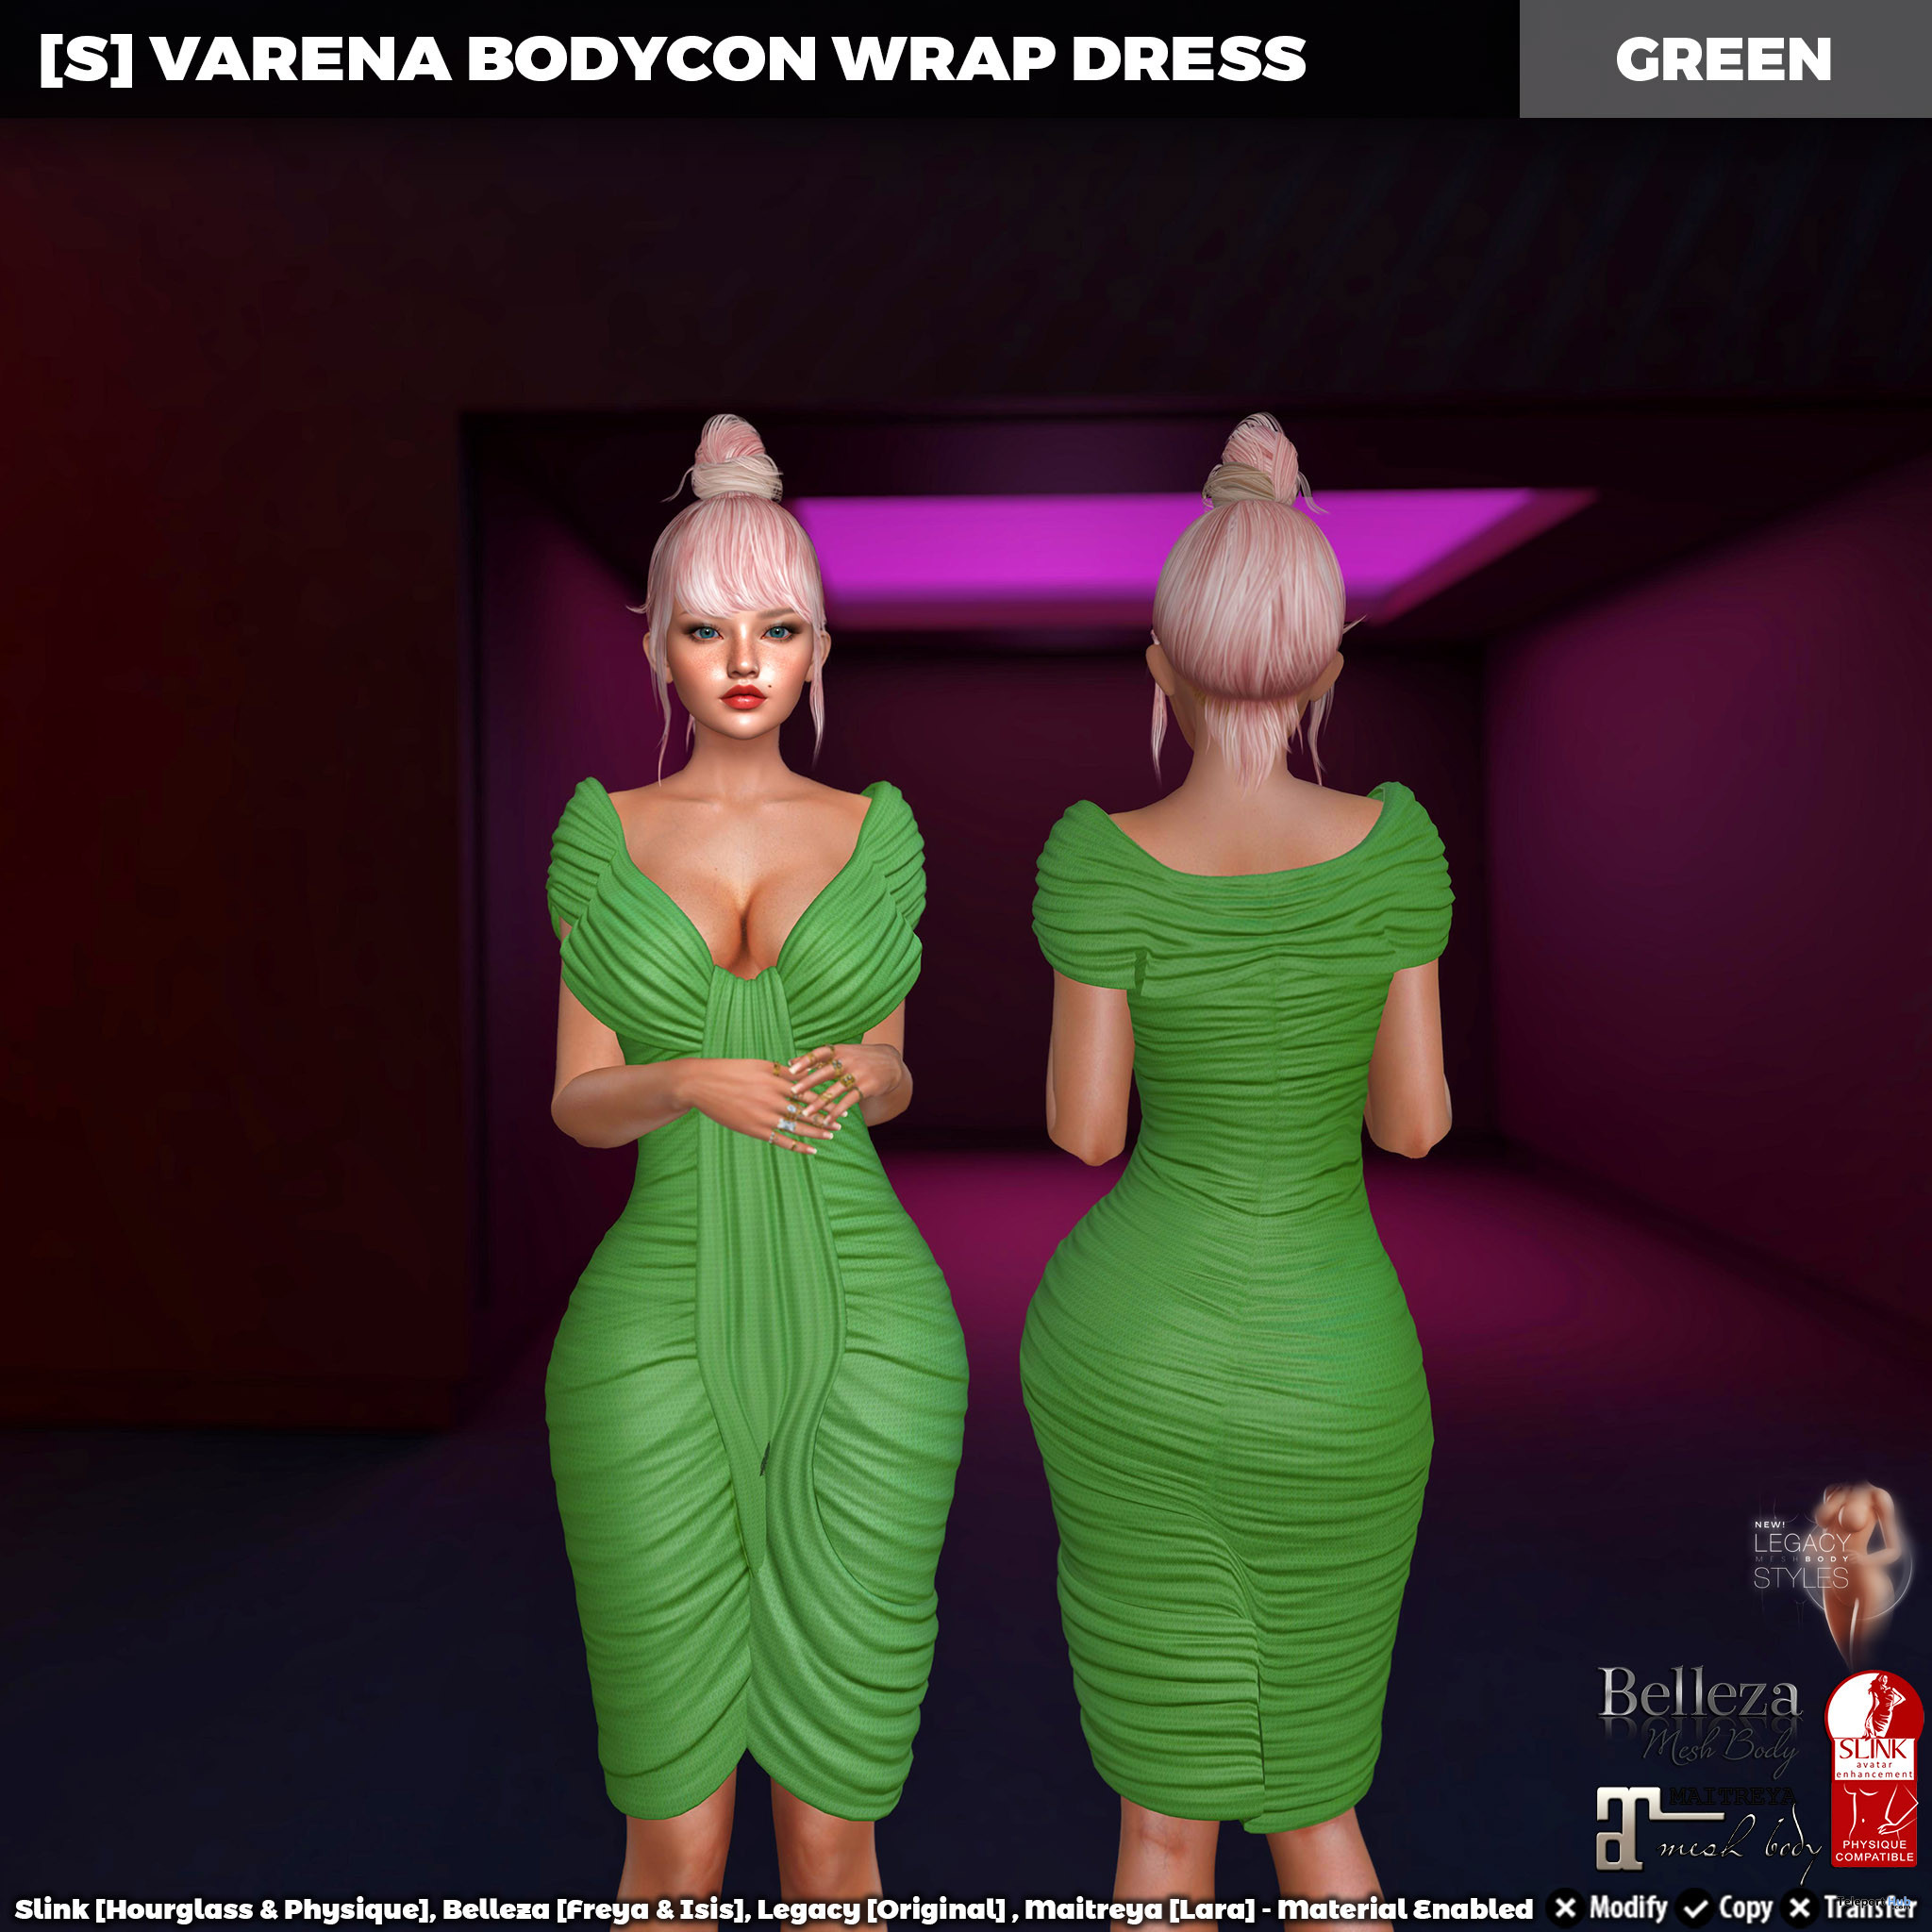 New Release: [S] Varena Bodycon Wrap Dress by [satus Inc] - Teleport Hub - teleporthub.com